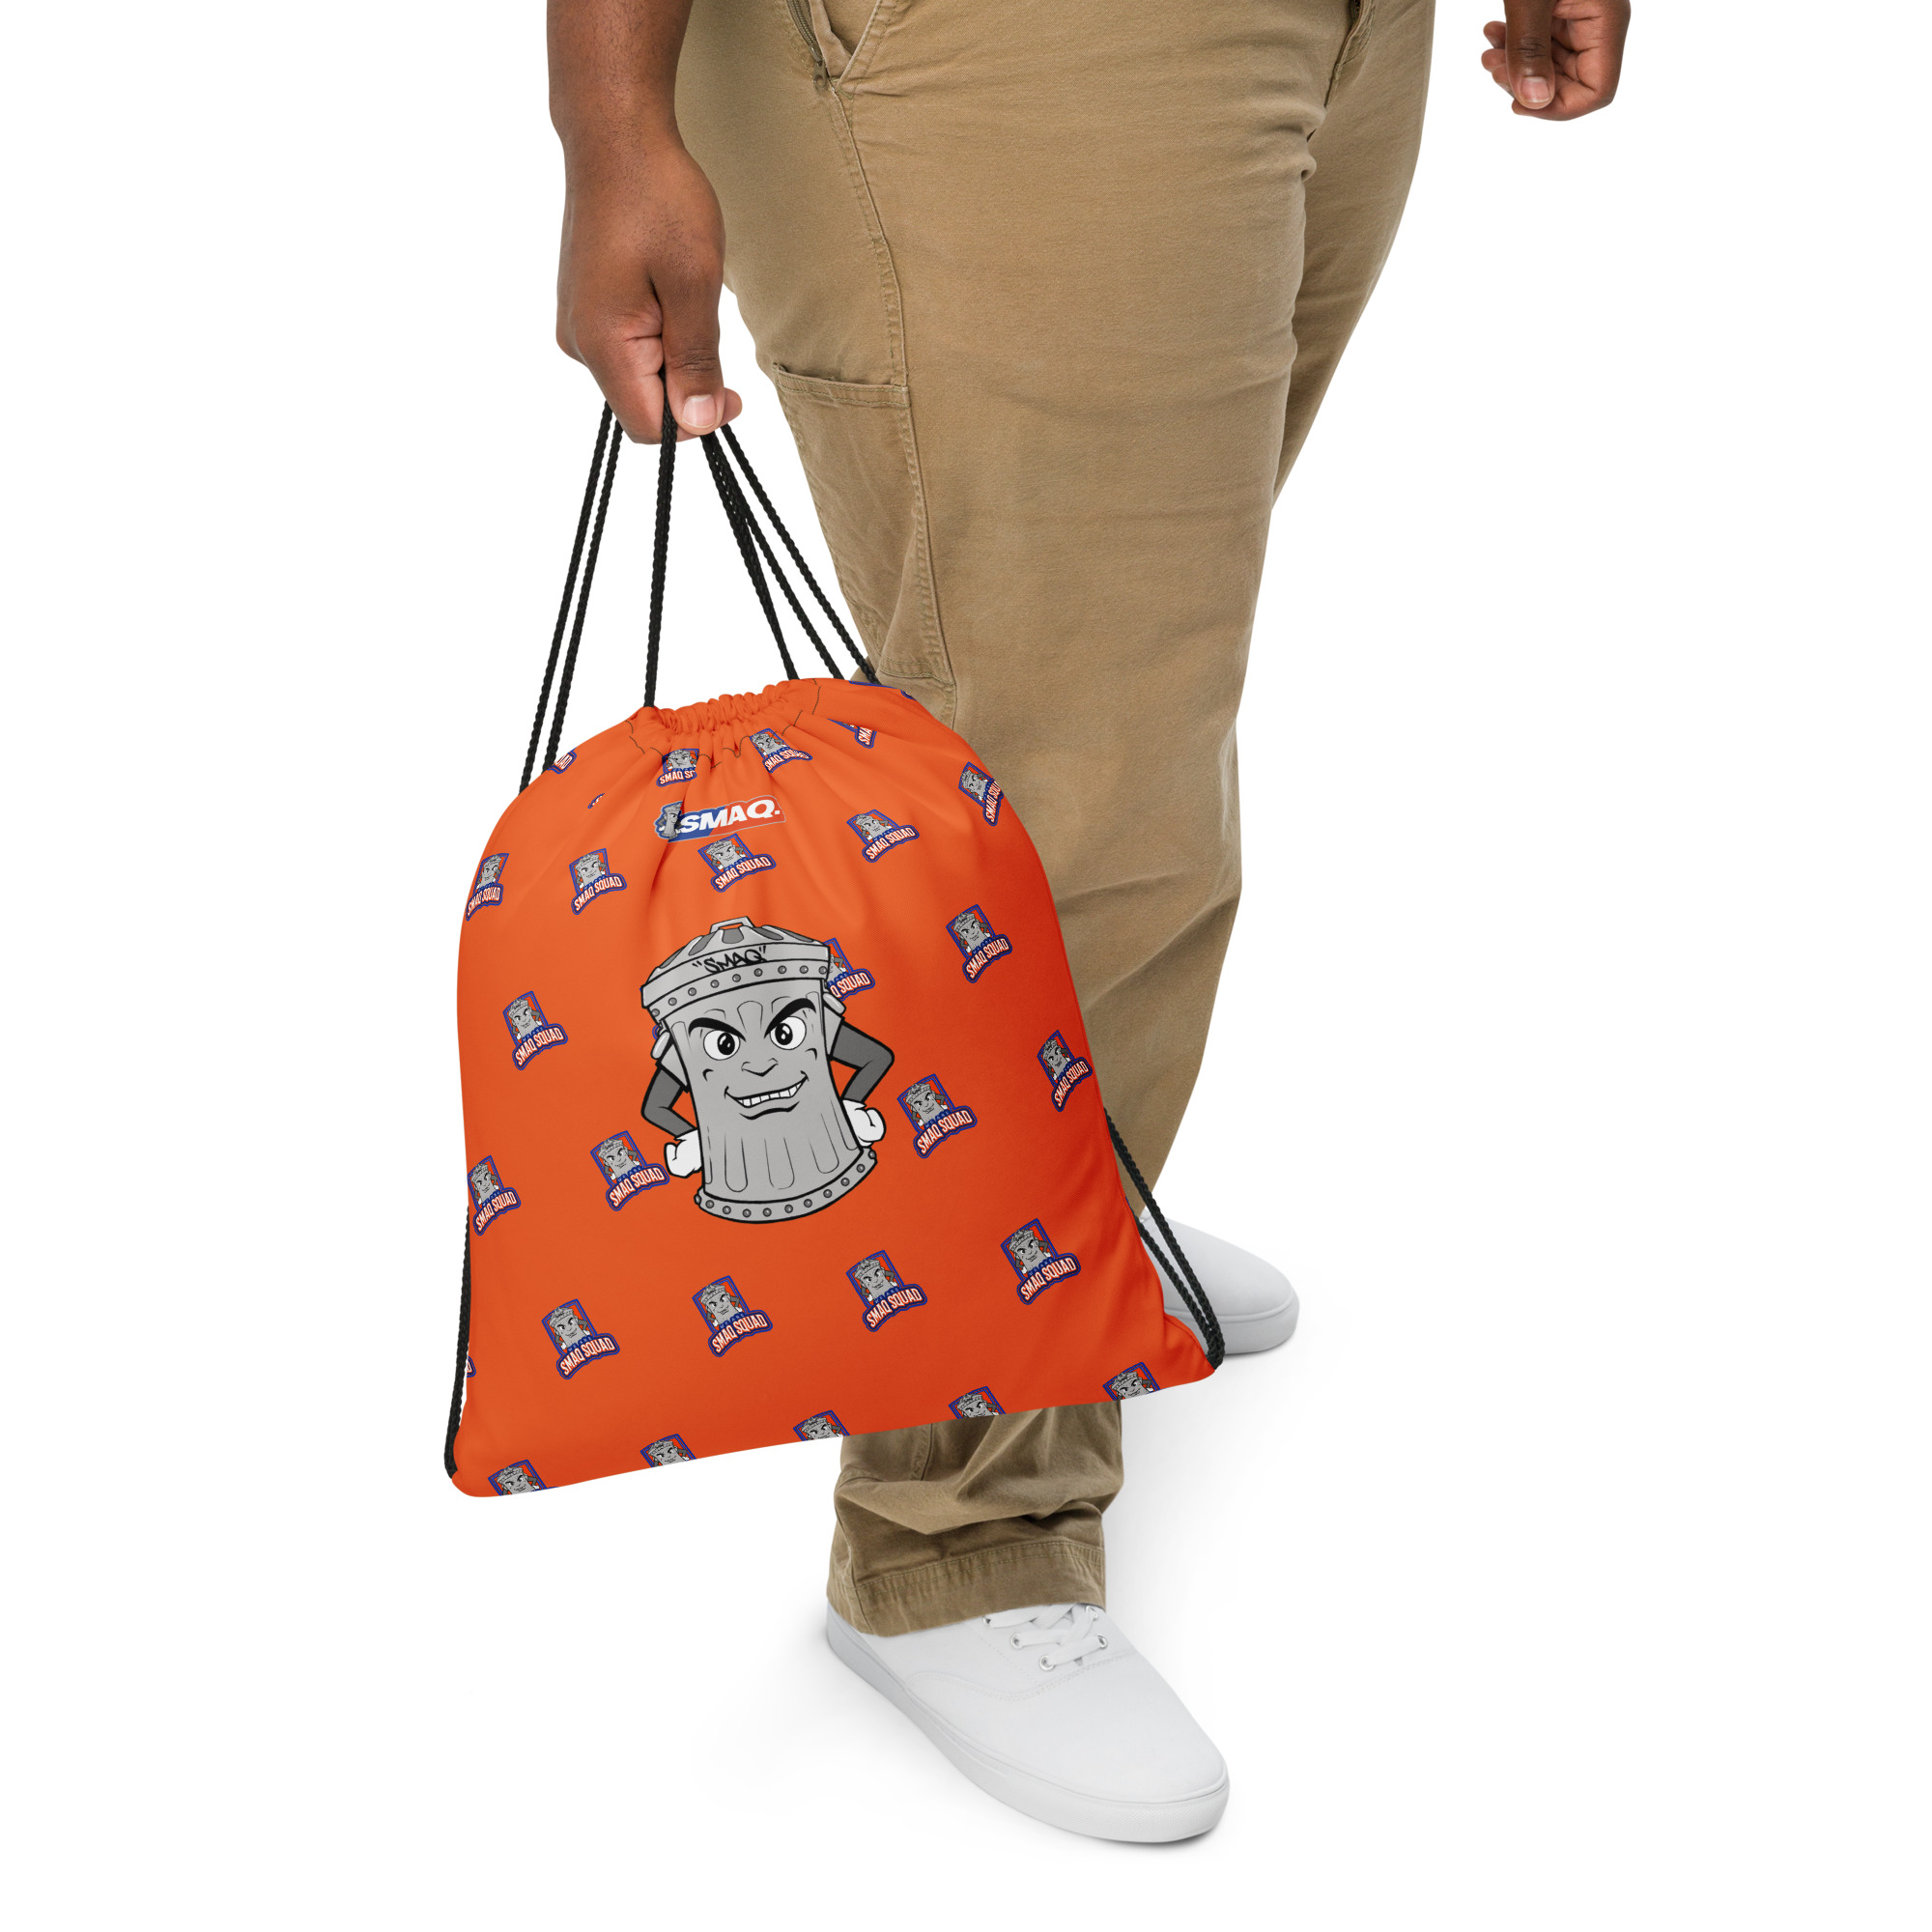 SMAQ Bag Orange Drawstring bag